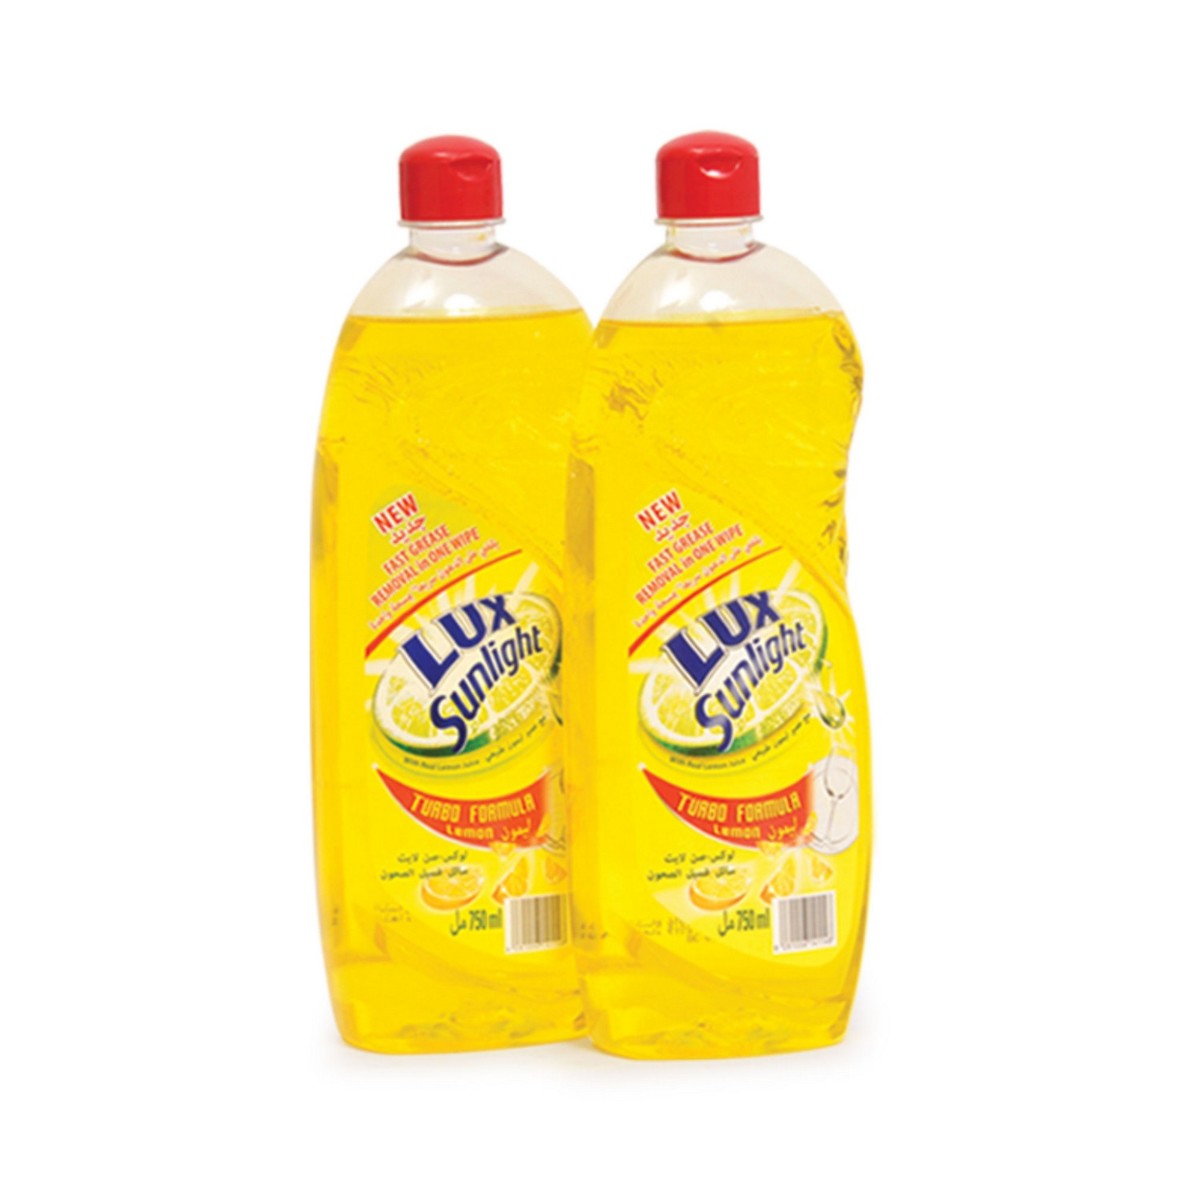 Lulu Lemon Dish Wash Liquid 4 x 420ml - Cleaning & Household